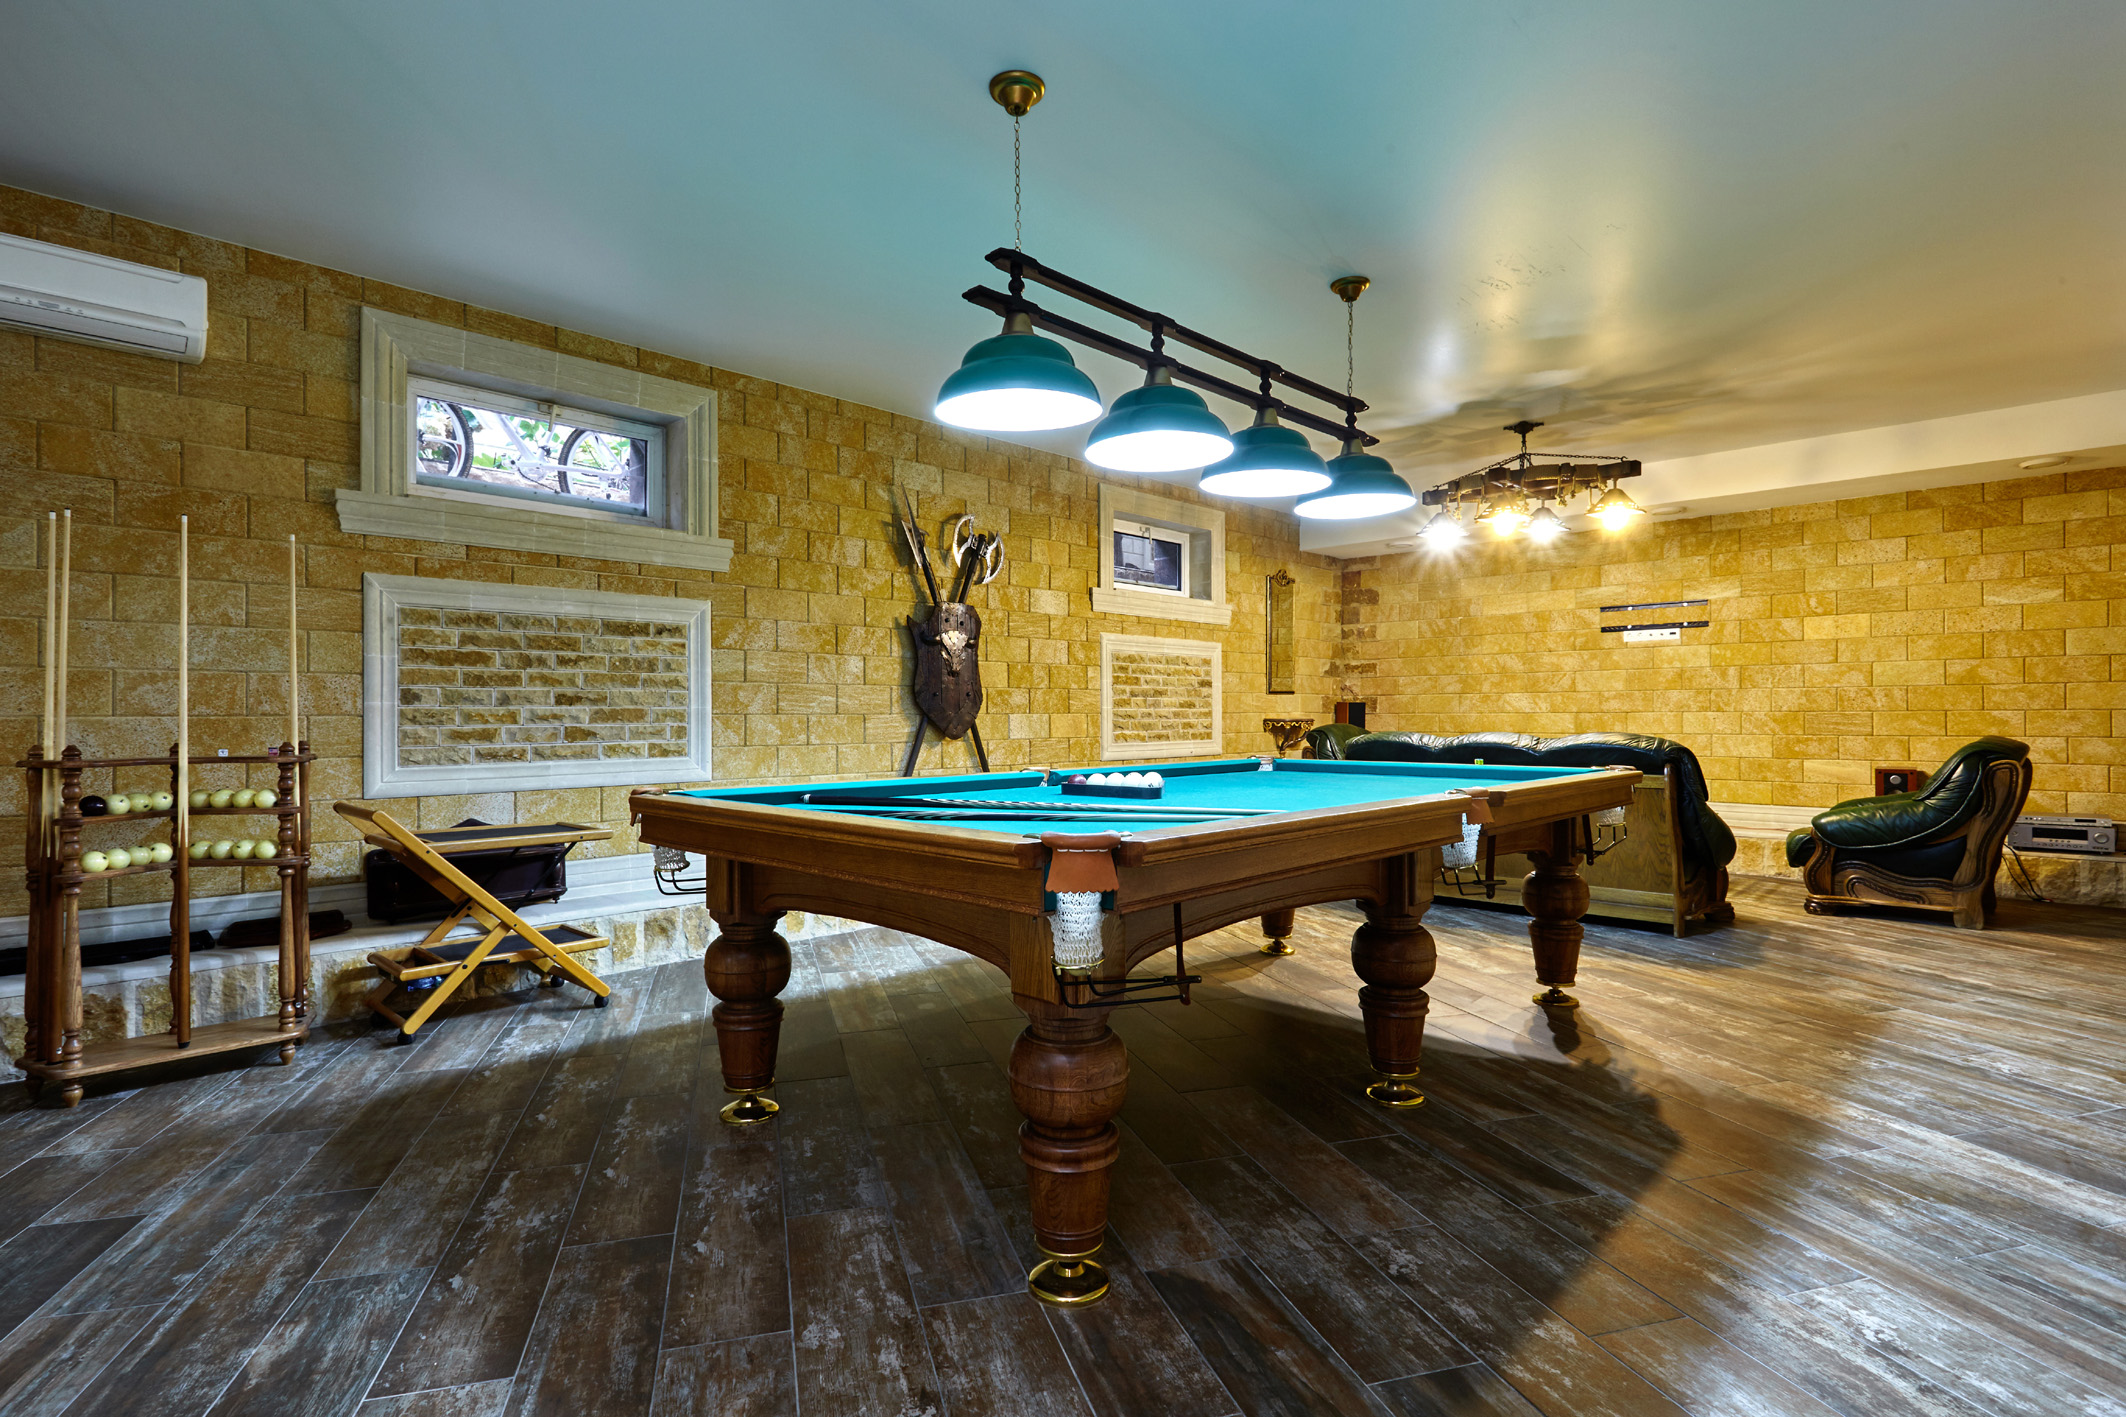 billiard room with a beautiful interior